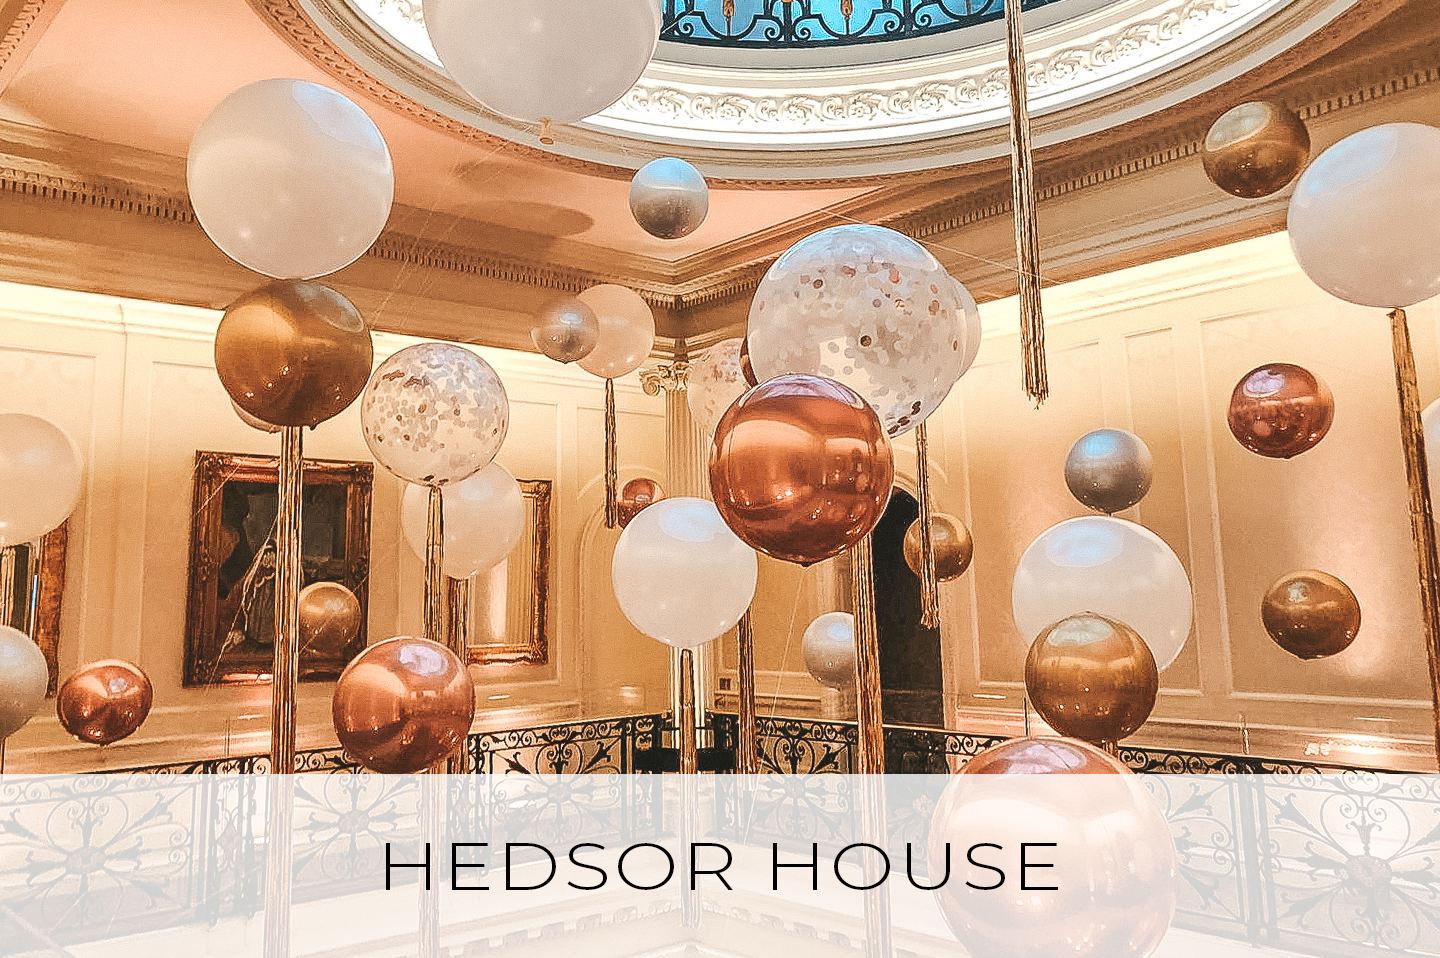 HEDSOR HOUSE Balloon Supplier